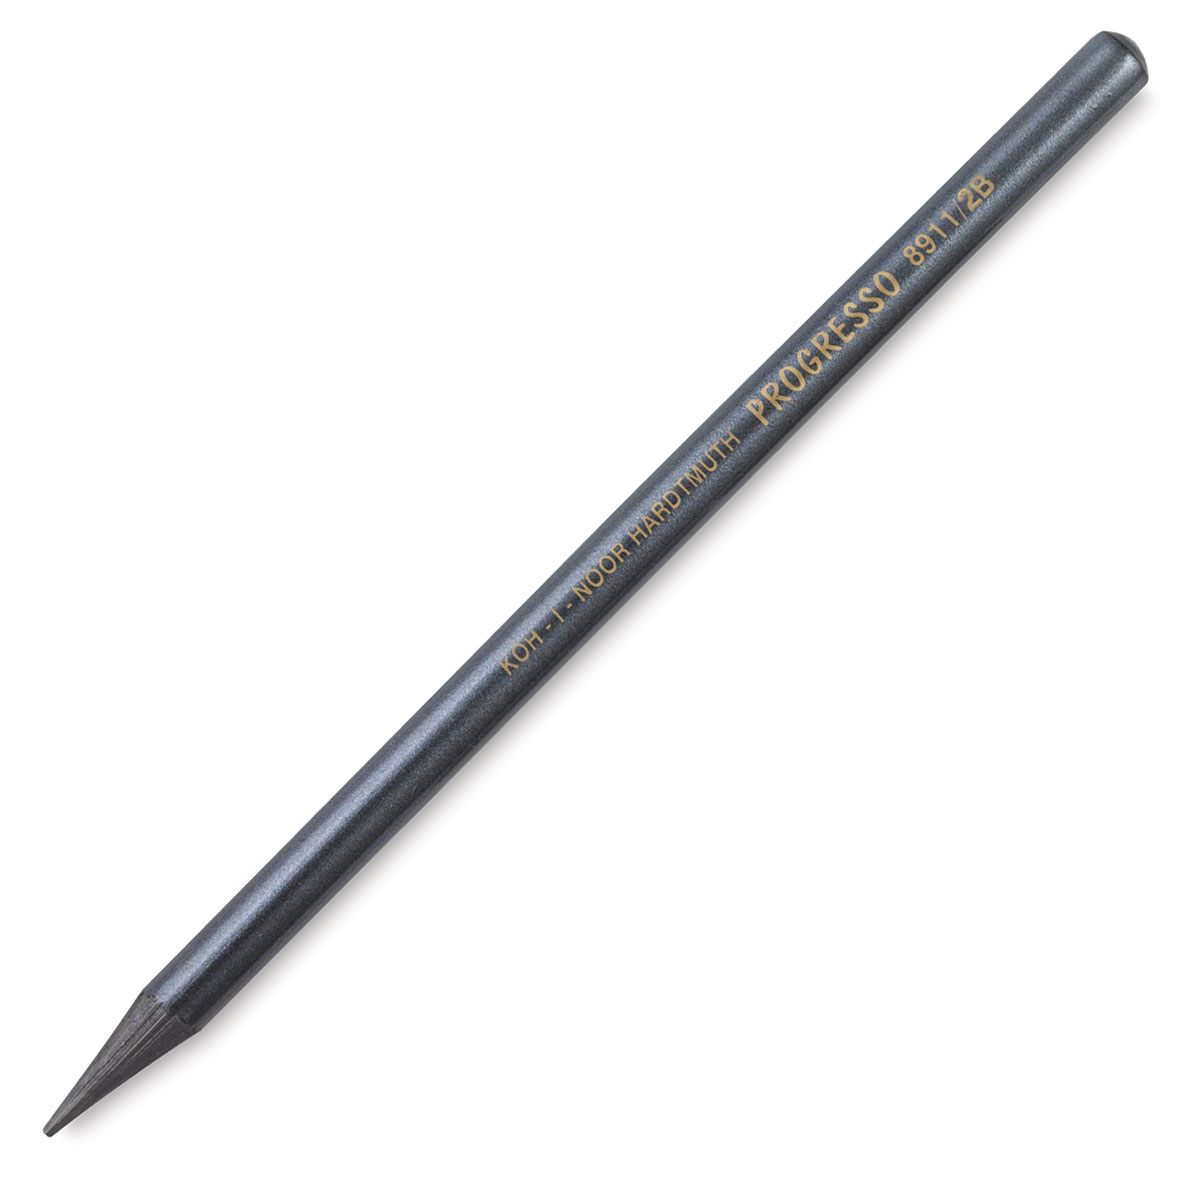 Woodless Graphite Pencil